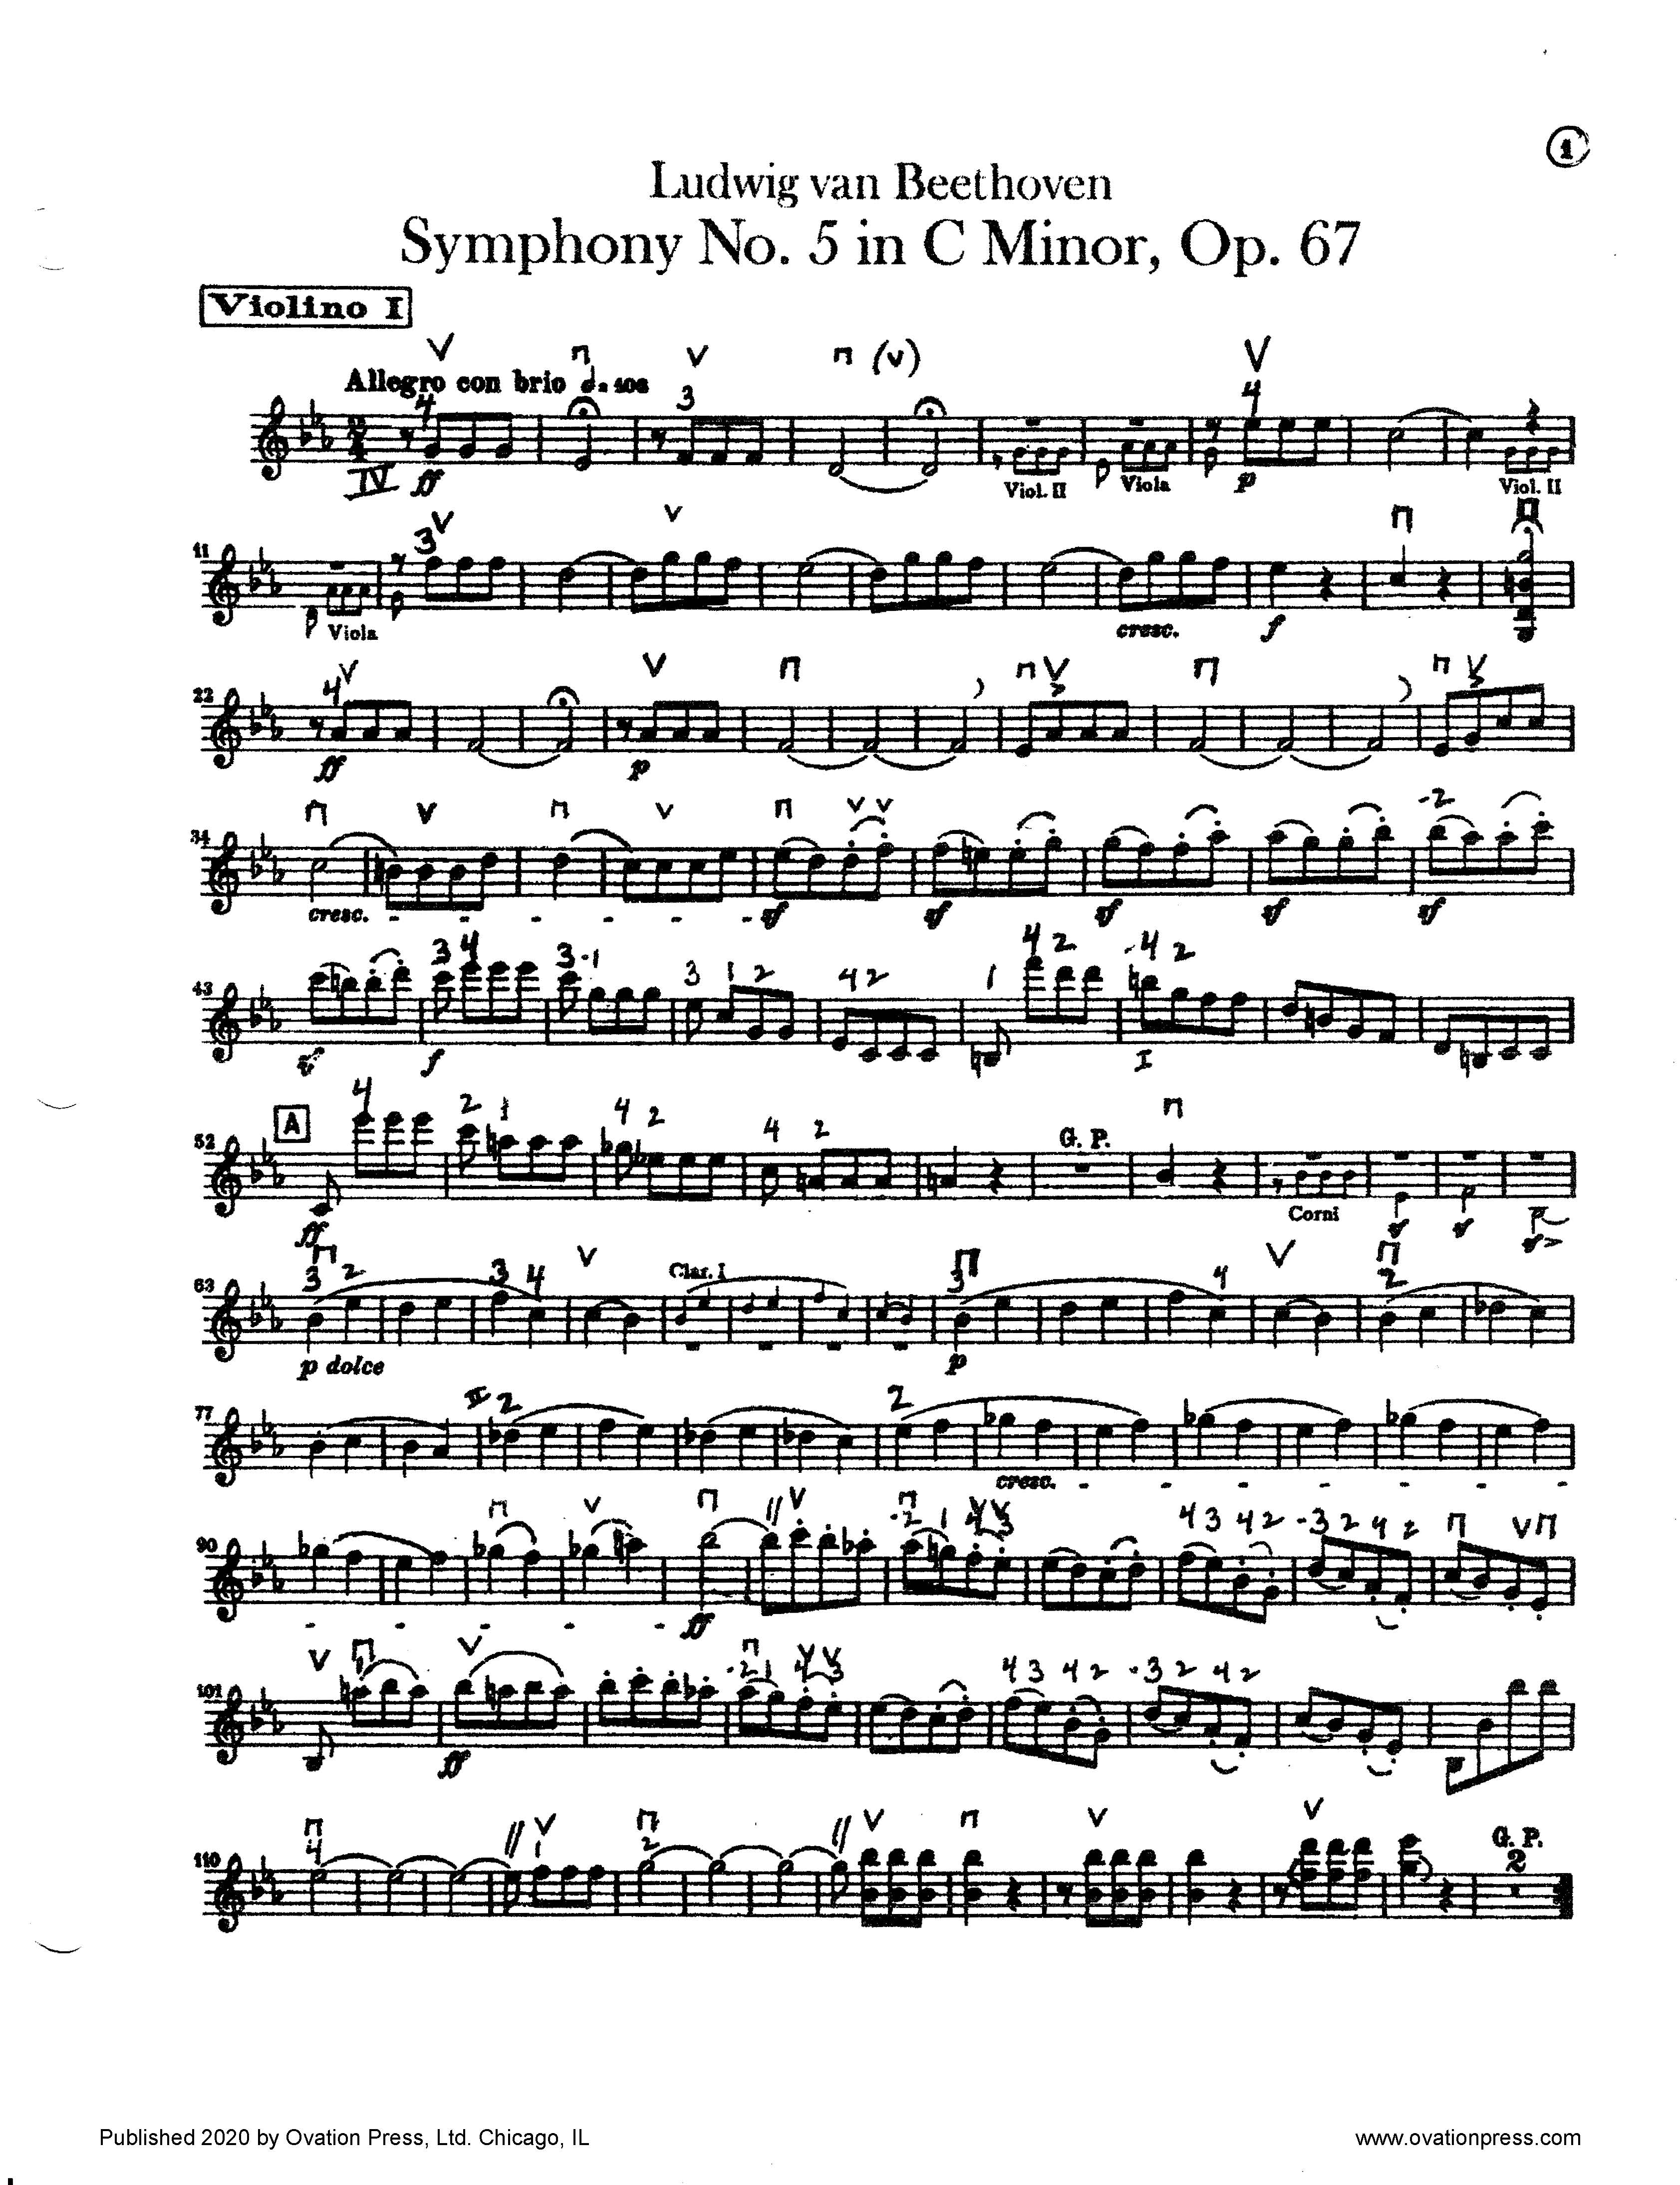 Symphony No. 5 (for Intermediate Orchestra) String Parts (Vln I & II, Vla,  Vcl, Bass)